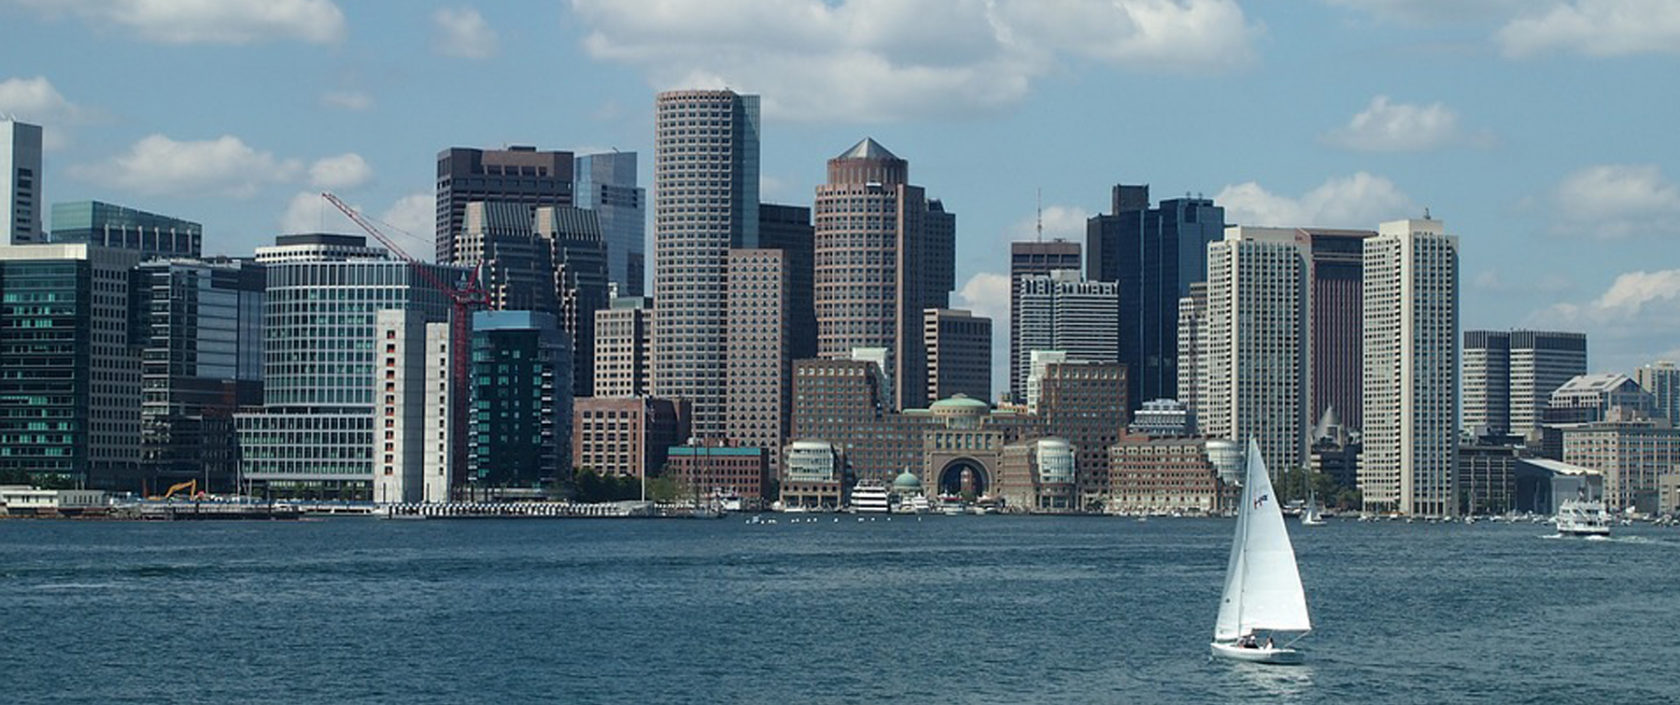 Photo of the Boston skyline